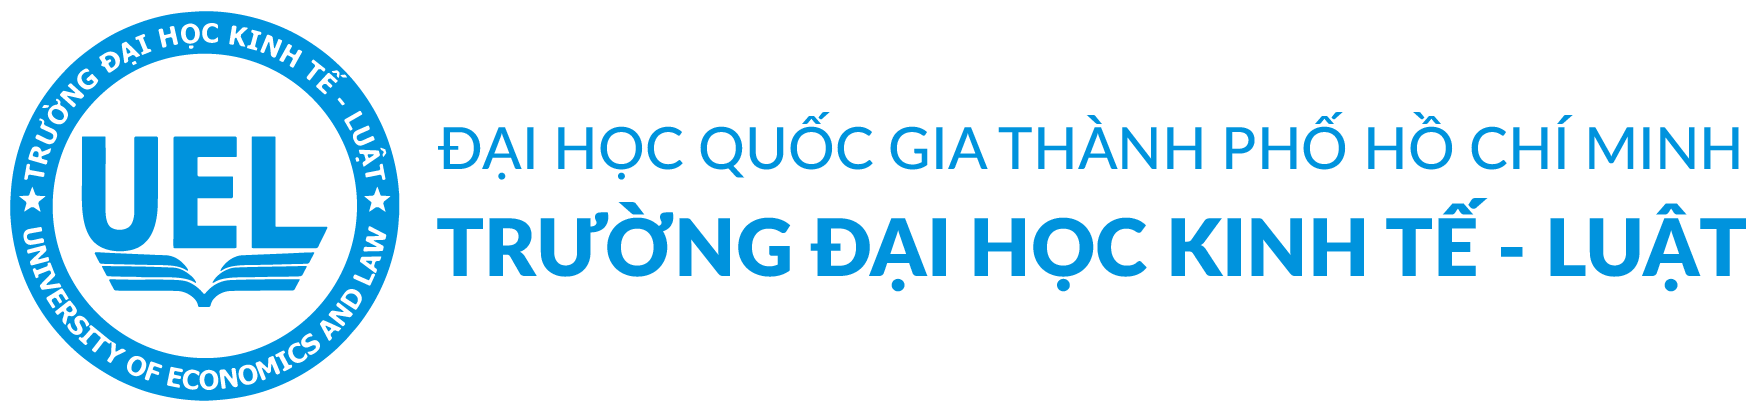 UEL - Logo Vietnamese name beside